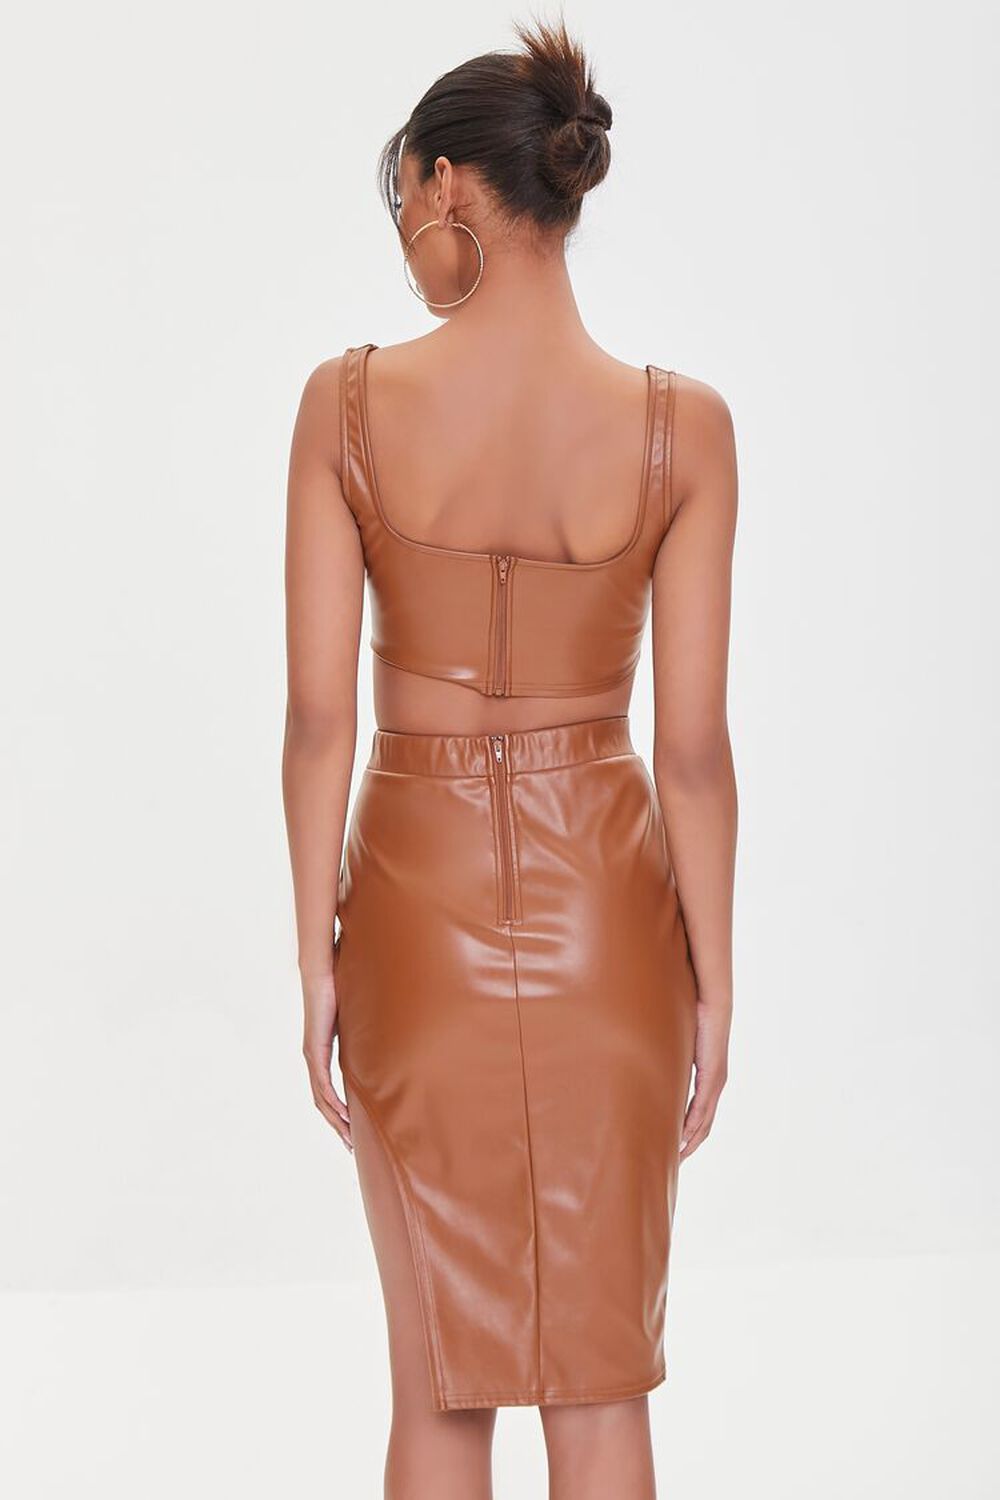 CAMEL Faux Leather Crop Top & Skirt Set, image 3